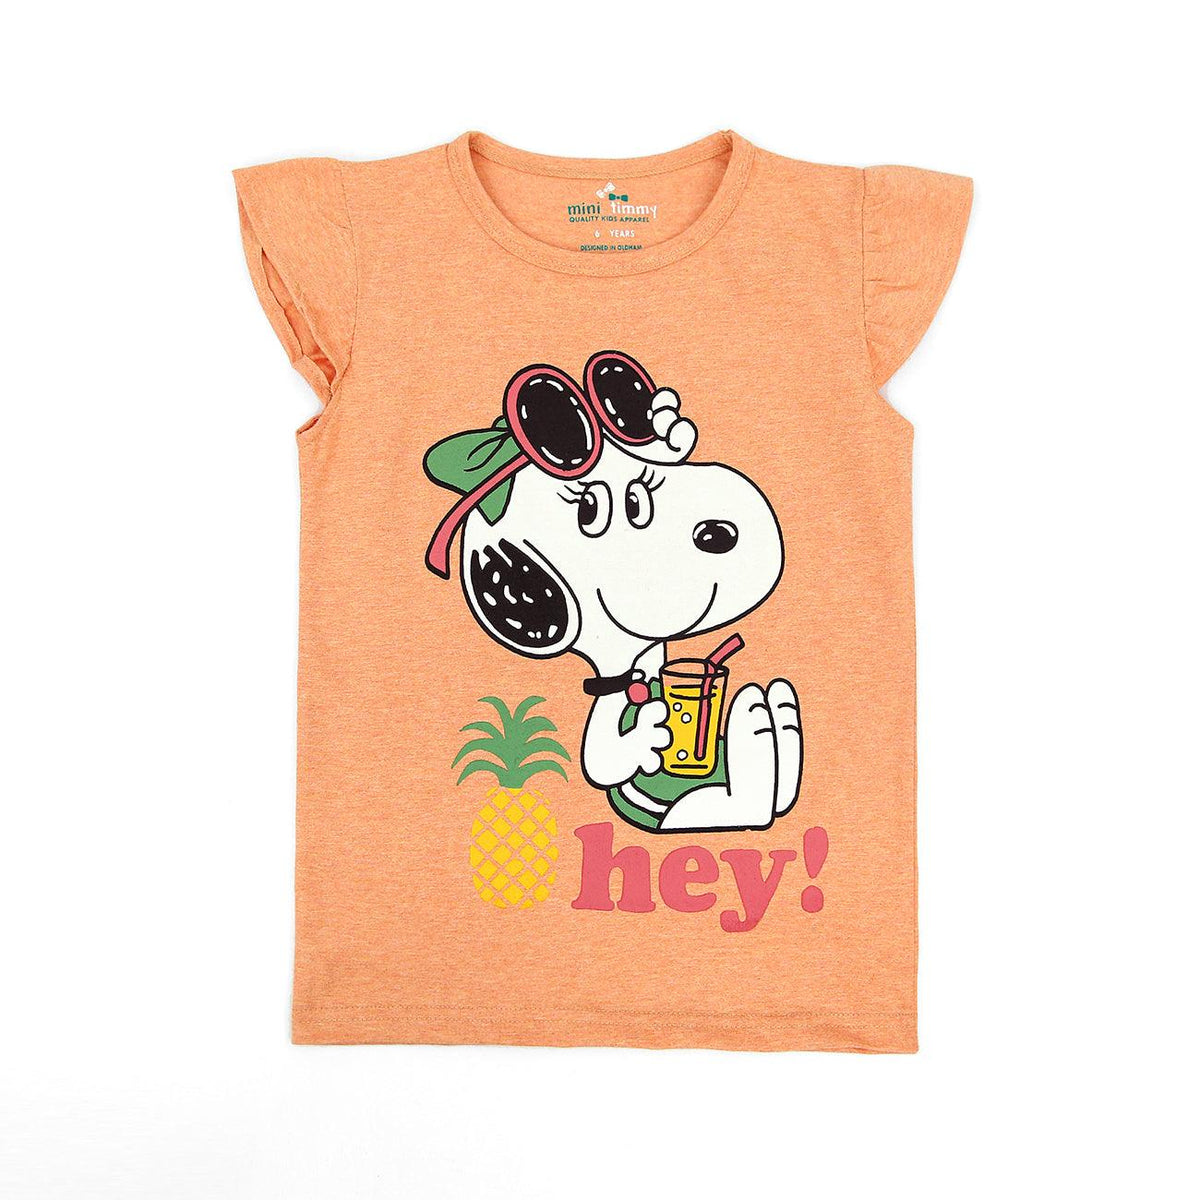 Girls Soft Cotton Printed T-Shirt 9 MONTH - 10 YRS (MI-11380) - Brands River